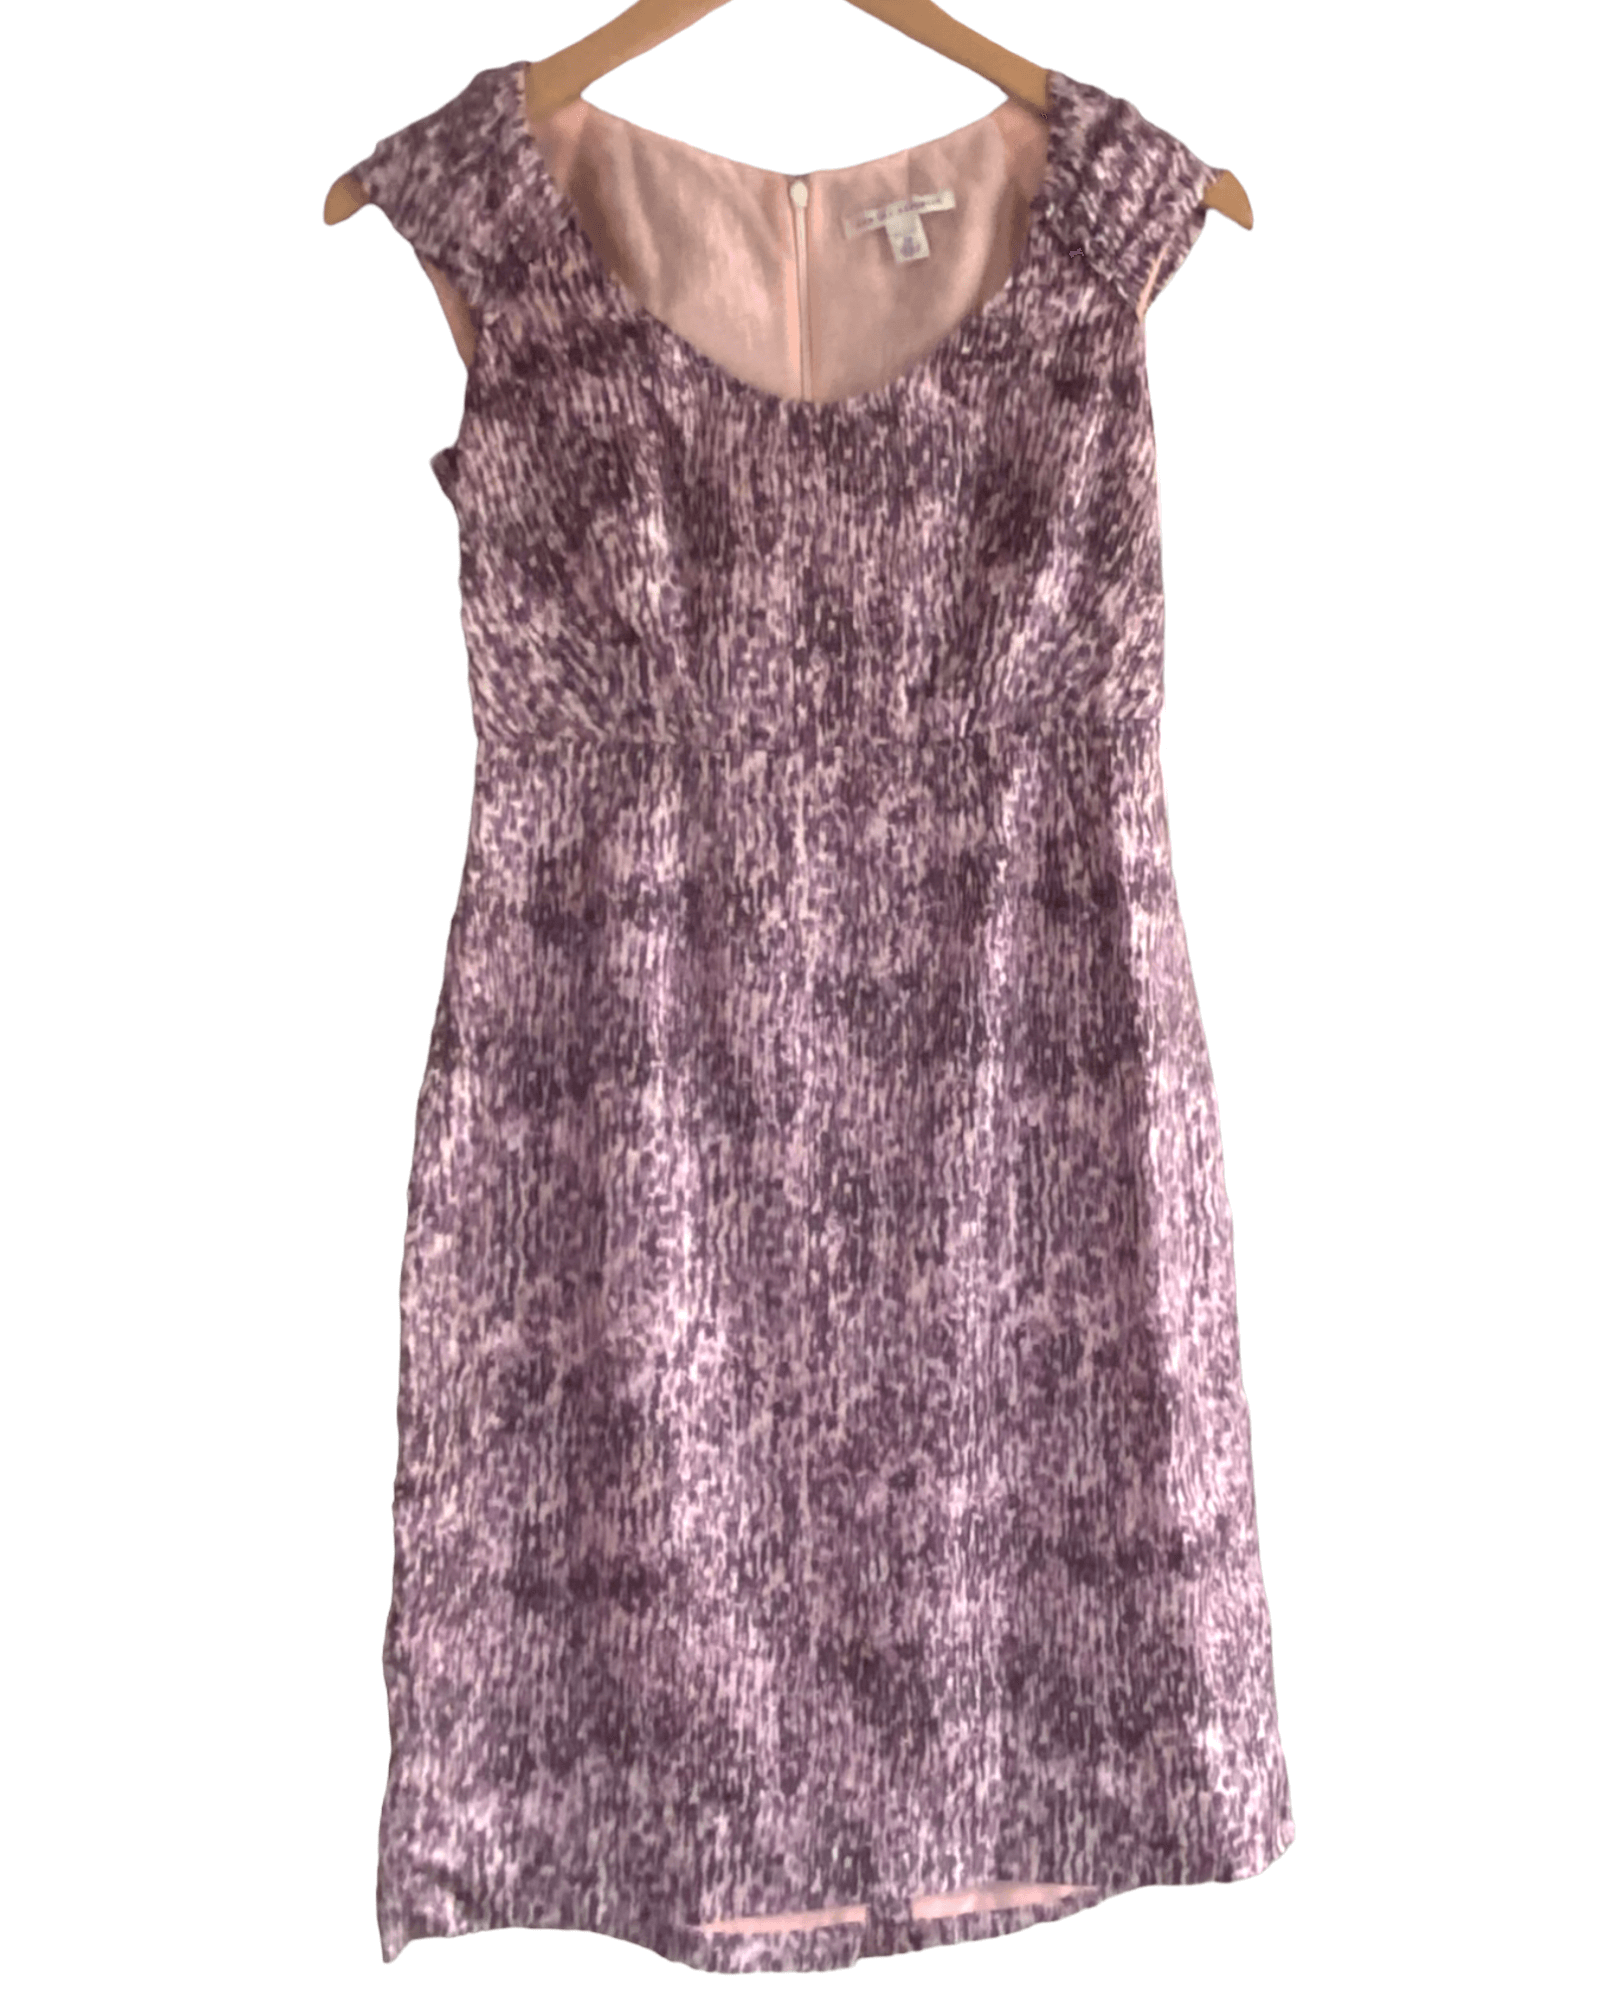 Dark Winter BANANA REPUBLIC pink and gray print sleeveless silk dress